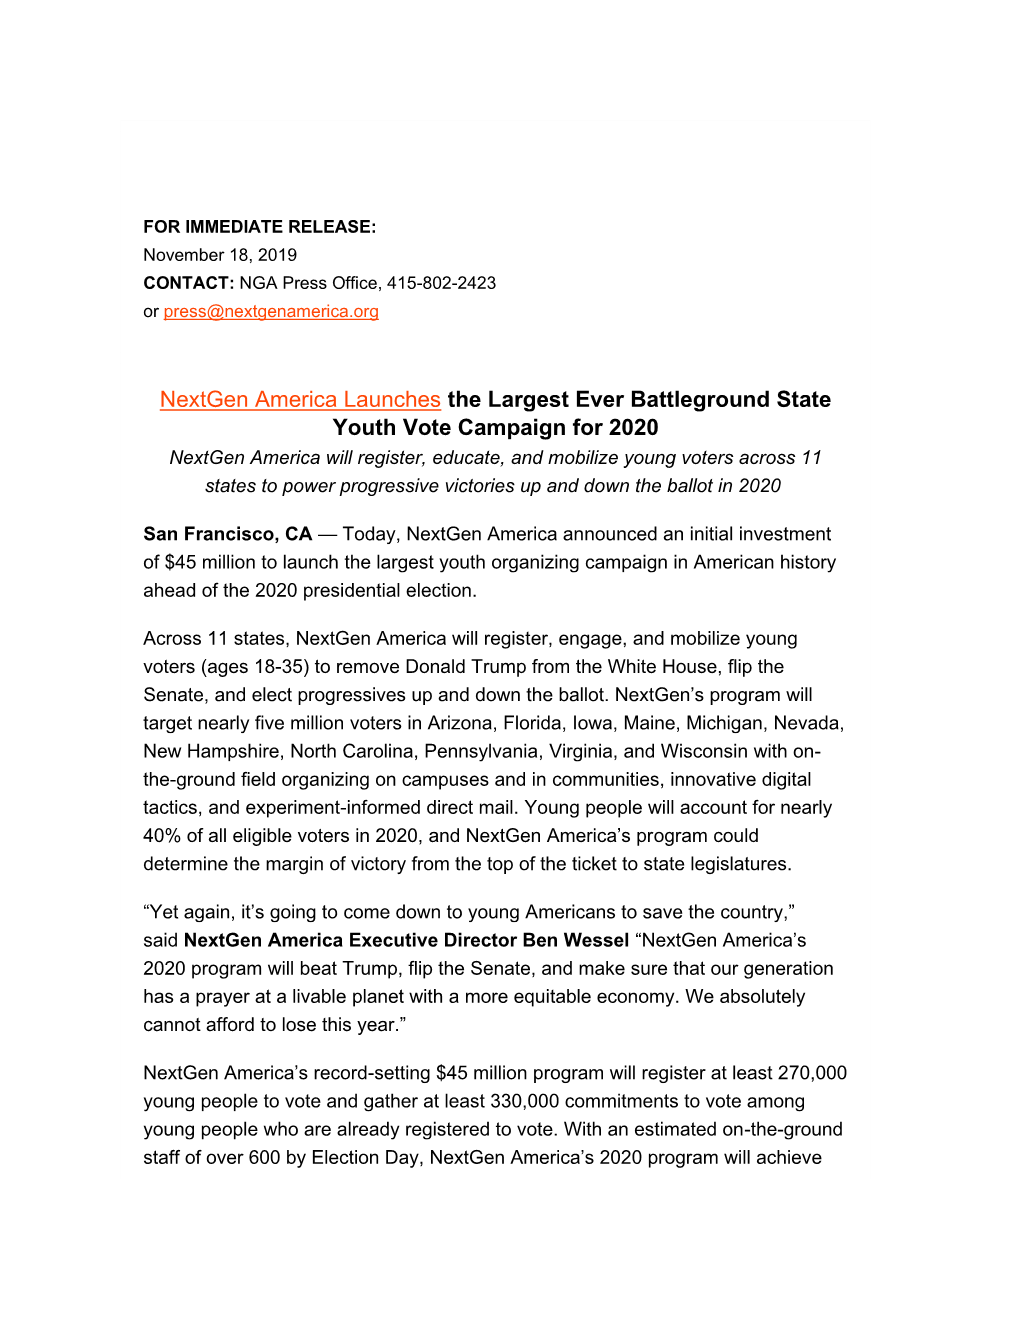 Nextgen America Launches the Largest Ever Battleground State